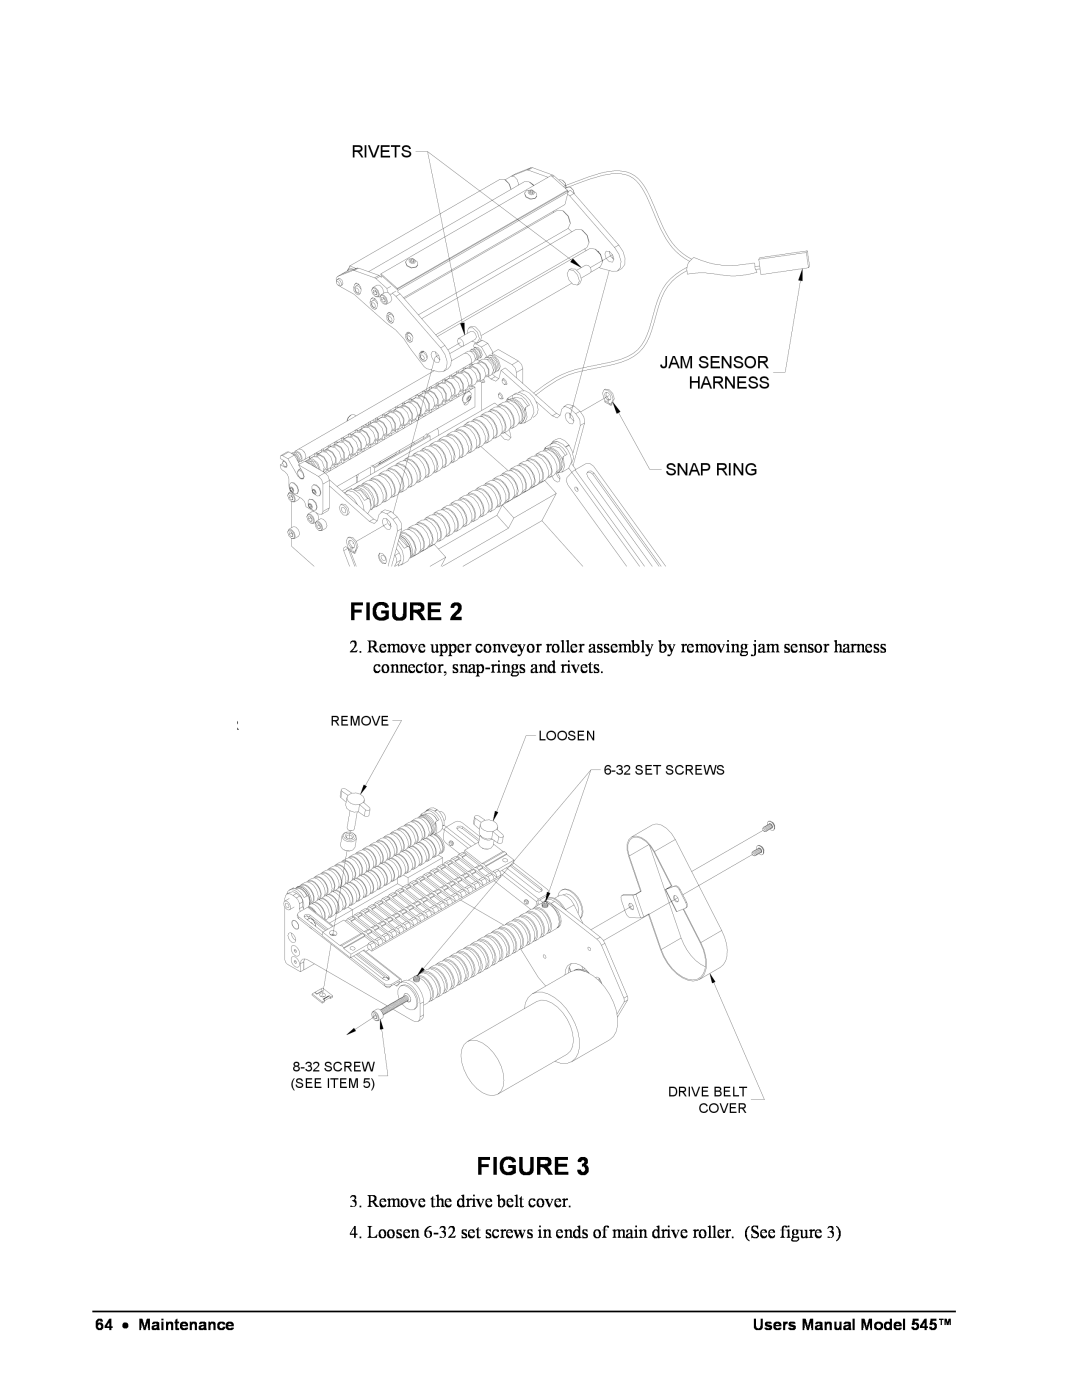 Paxar 545 user manual Rivets Jam Sensor Harness Snap Ring, Remove the drive belt cover, Maintenance, Users Manual Model 